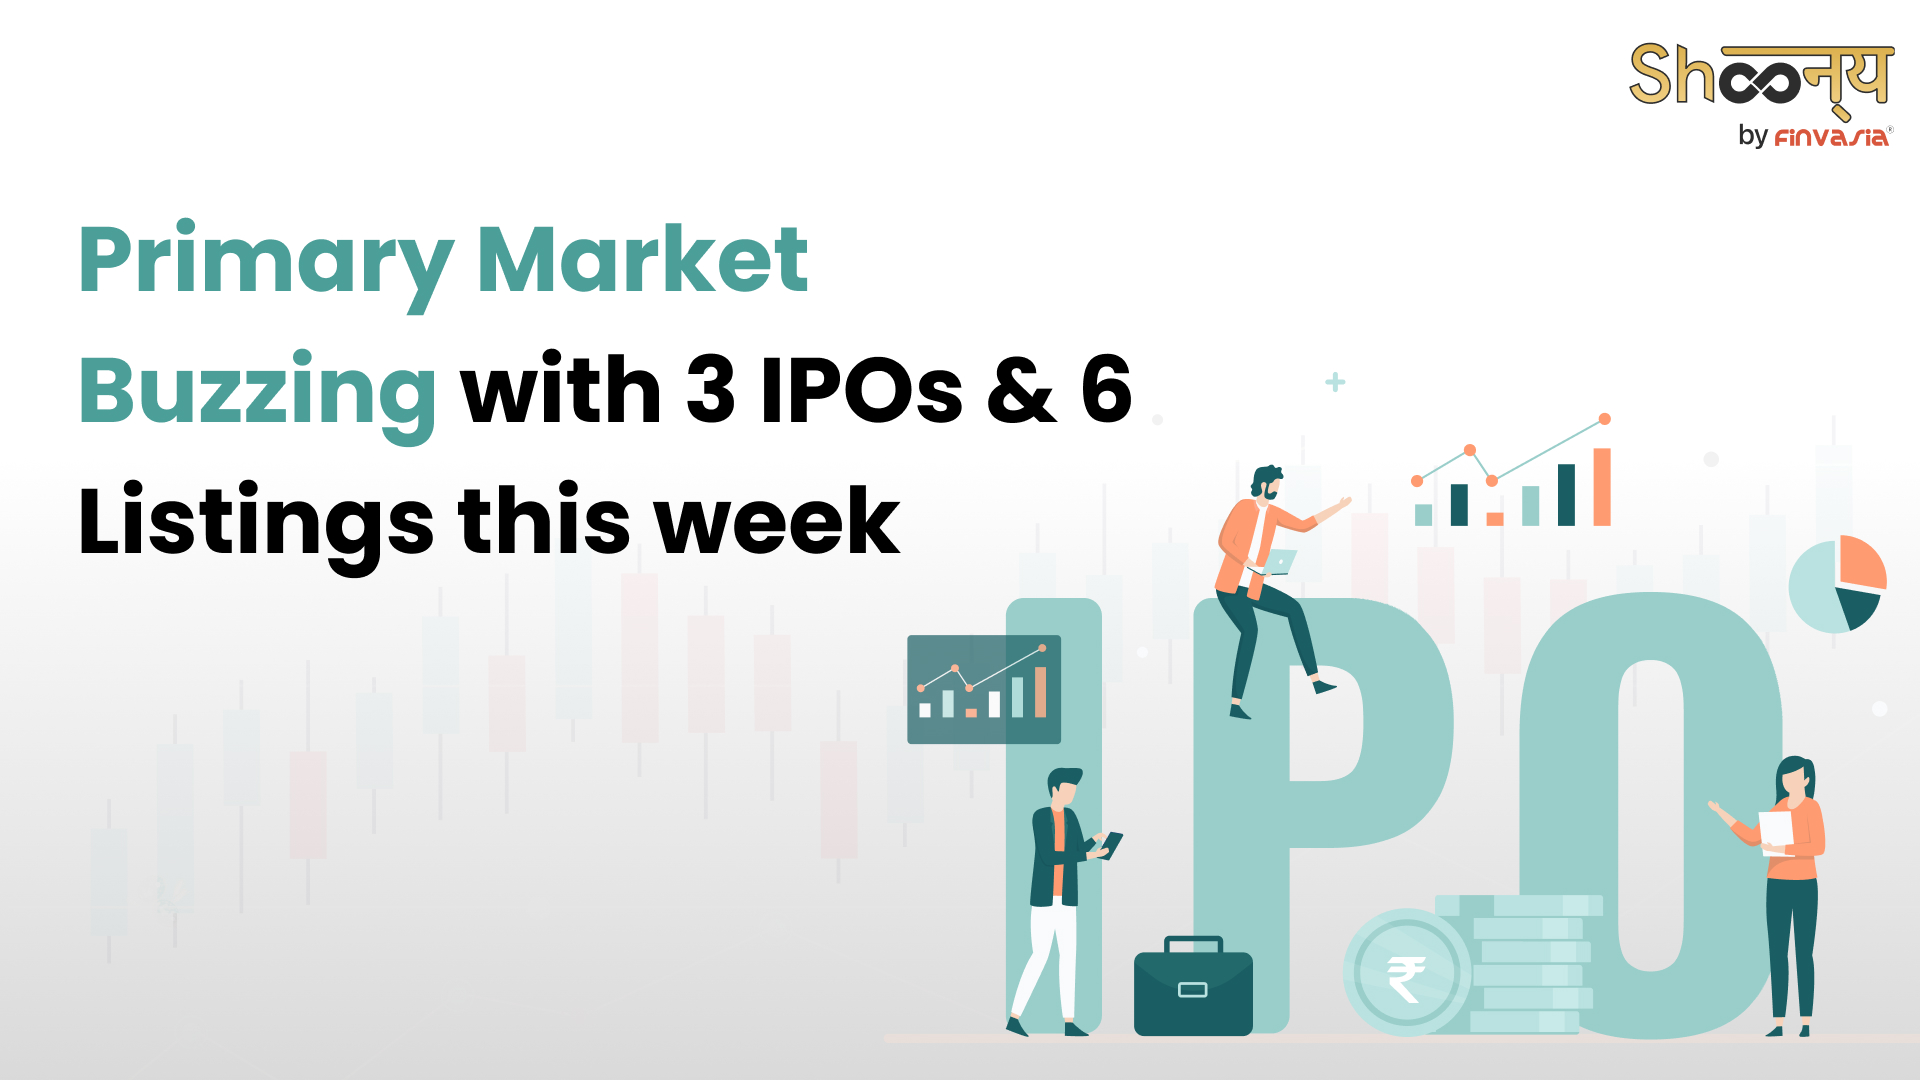 
  3 upcoming IPOs, 6 Listings To Keep Investors On Their Toes This Week